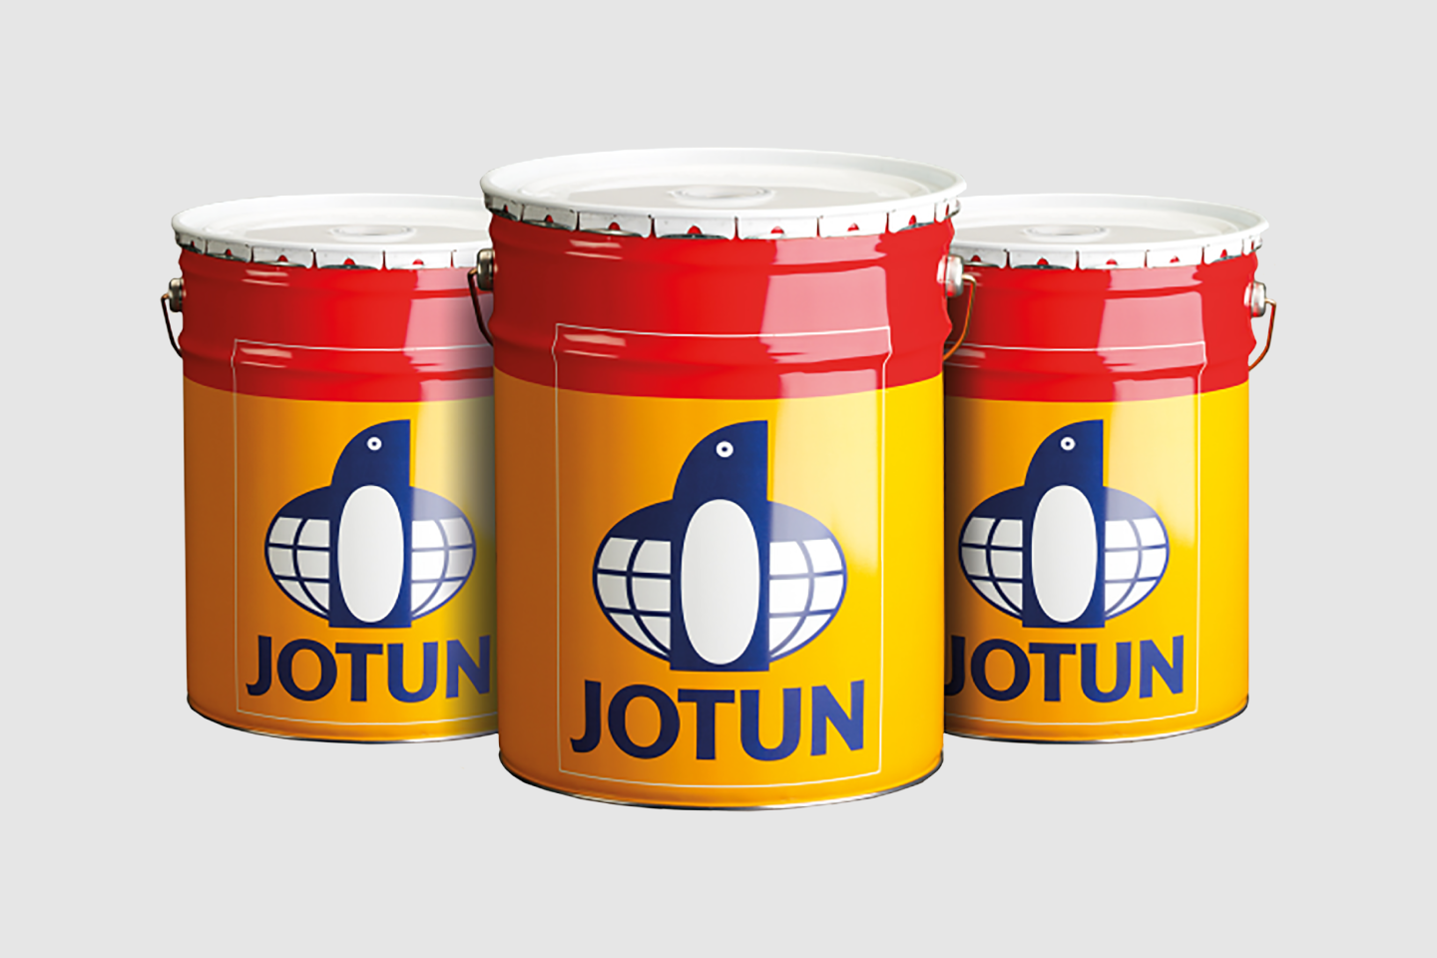 Jotun product can